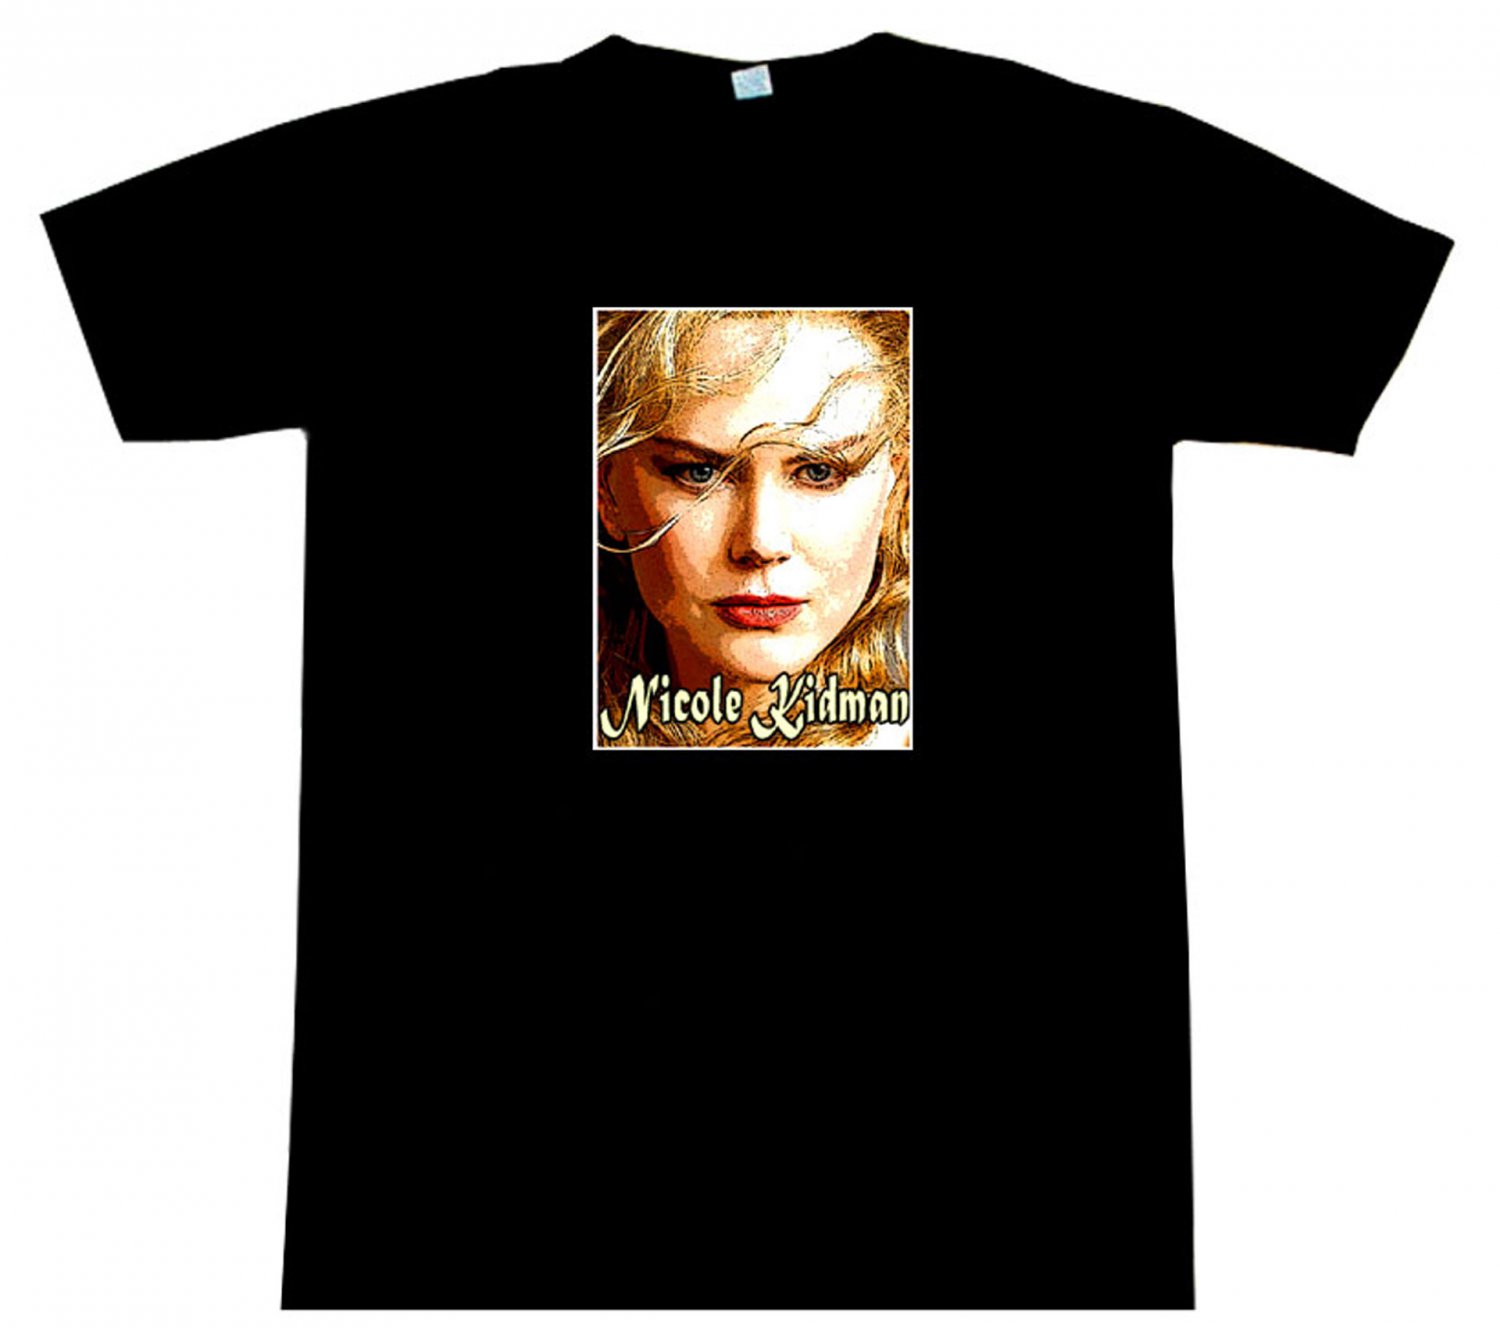 Nicole Kidman T-Shirt BEAUTIFUL!!